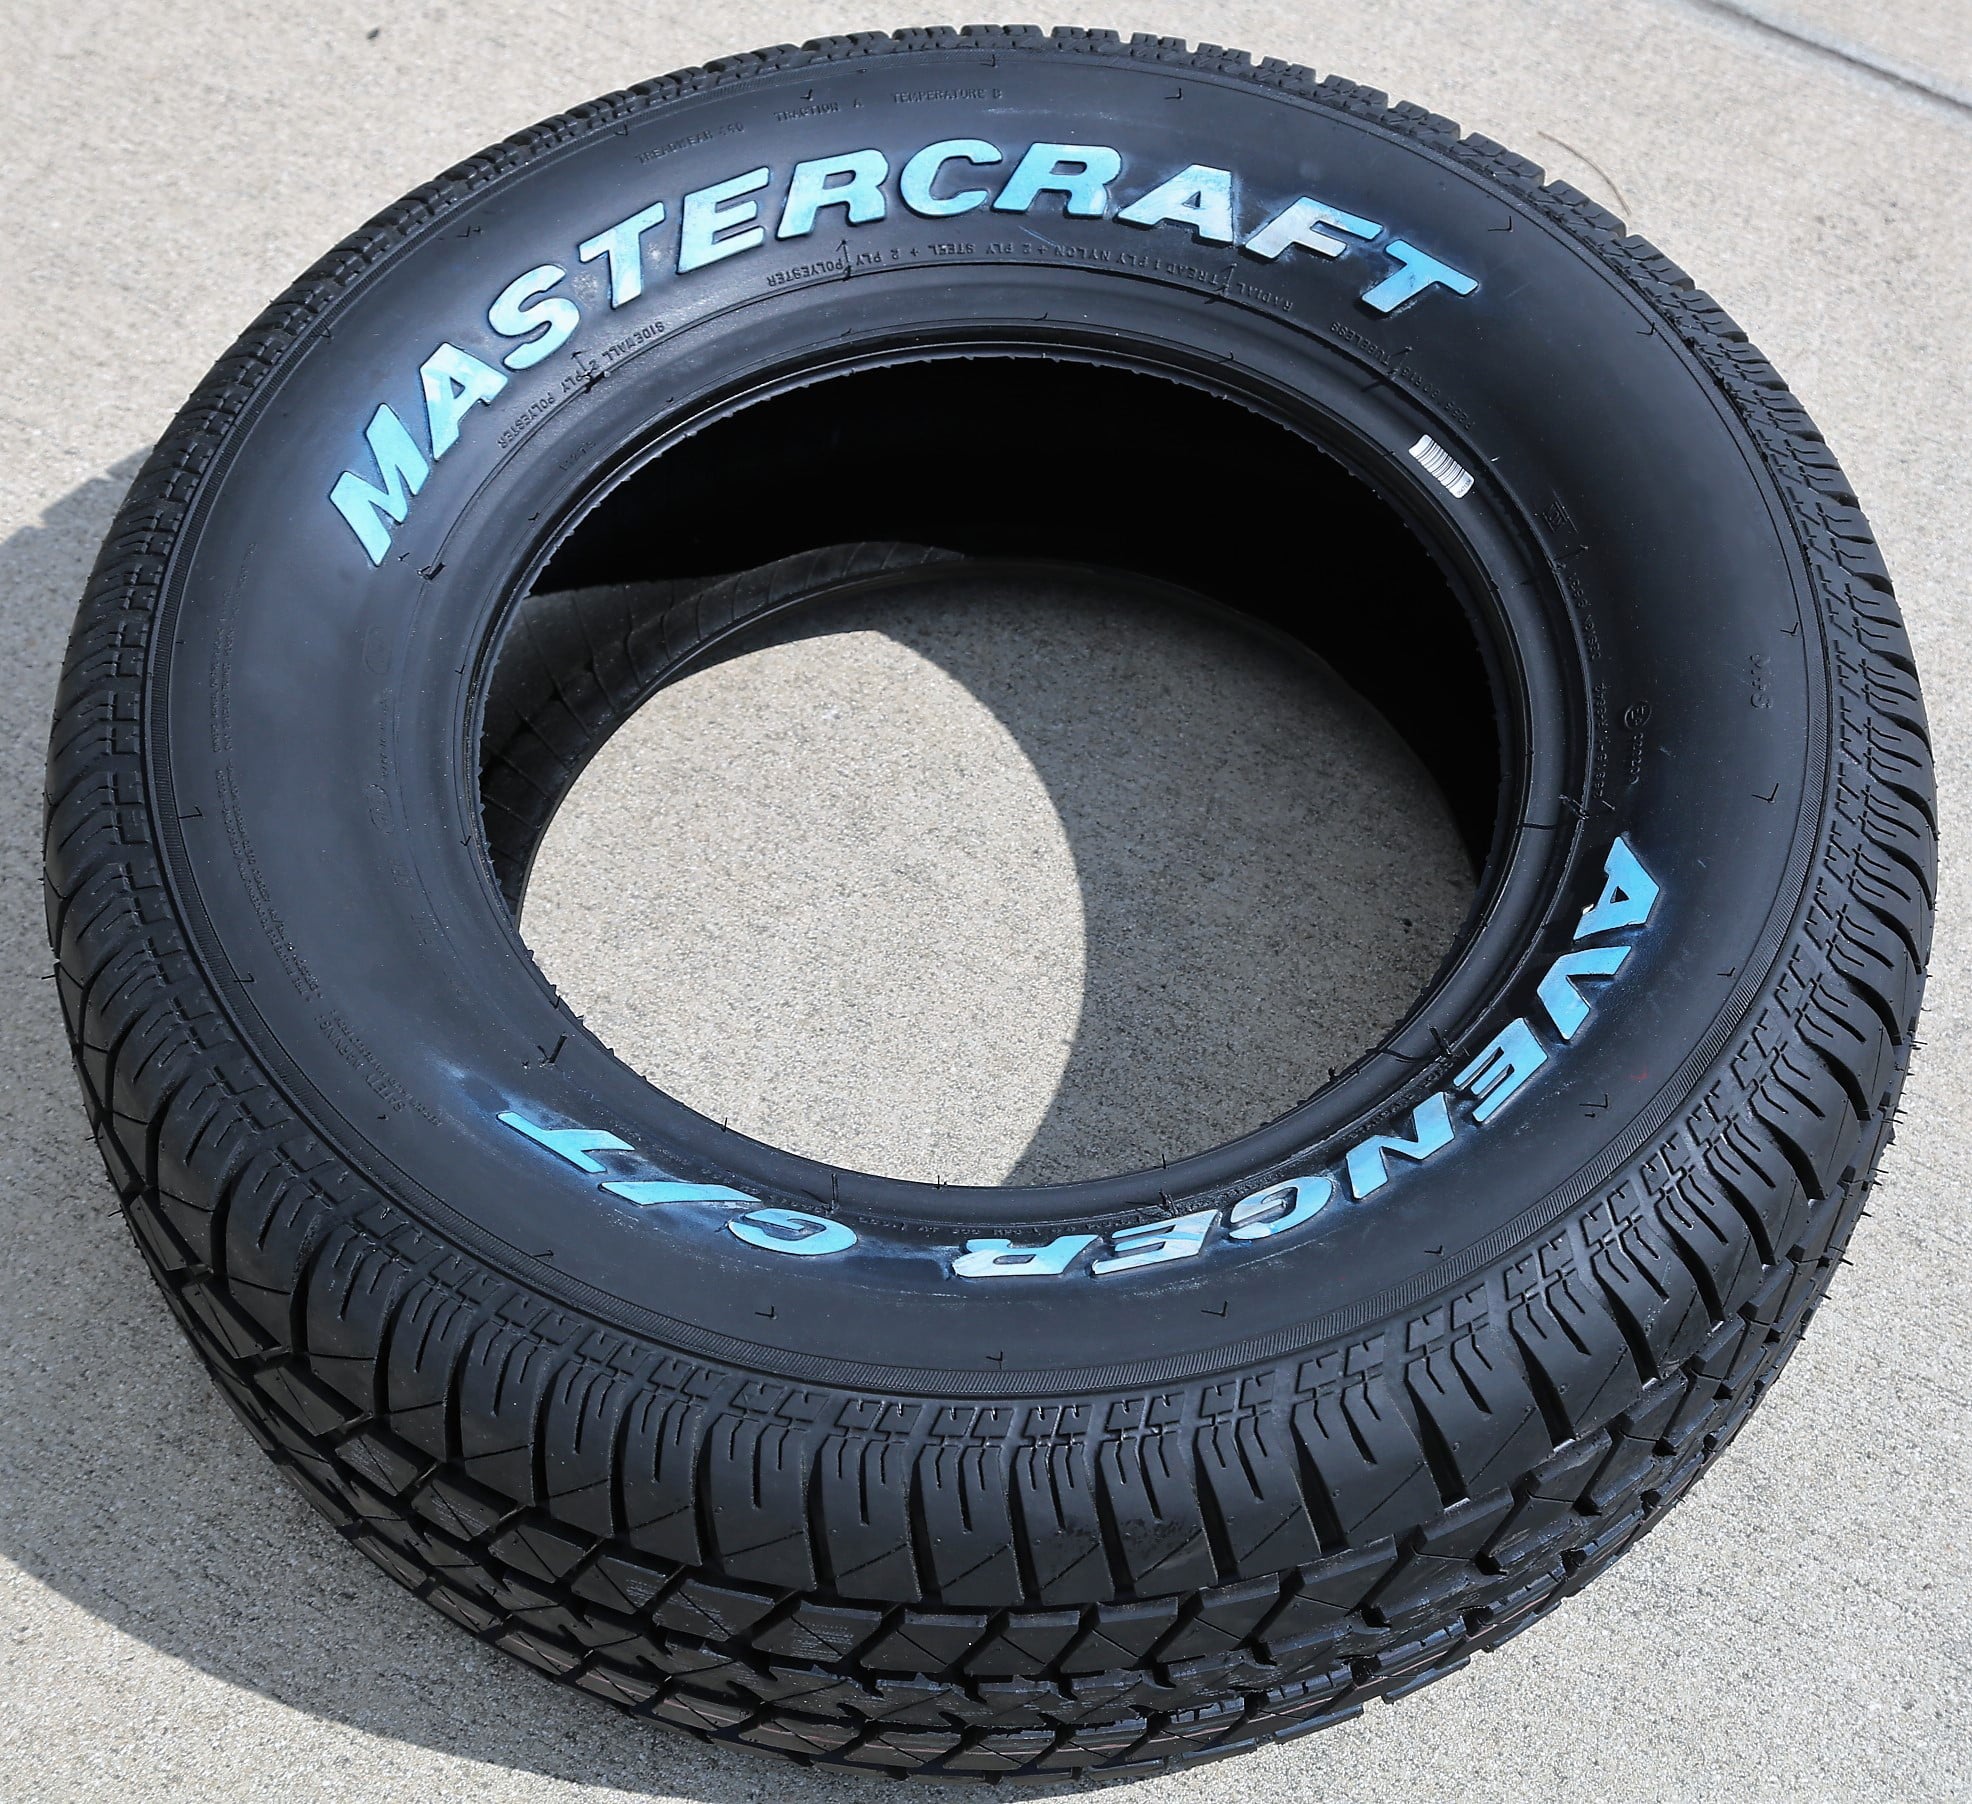 Mastercraft Avenger G/T 235/70R15 102T AS All Season A/S Tire